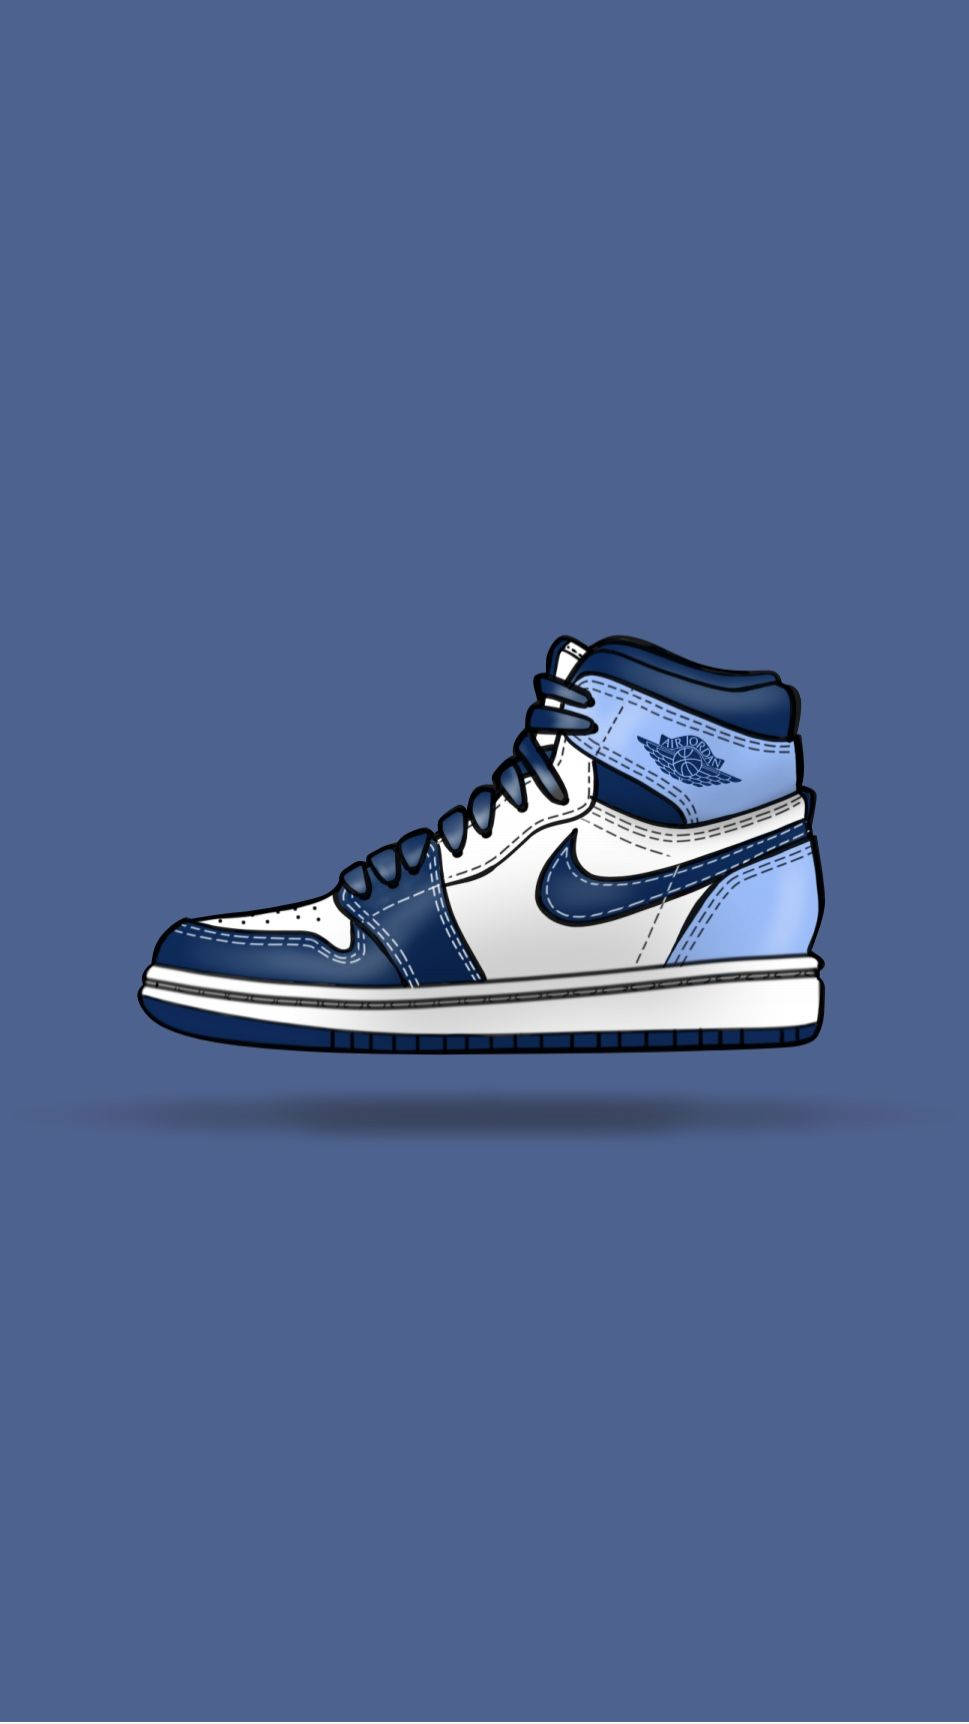 Blue Air Jordan Shoes Wallpaper